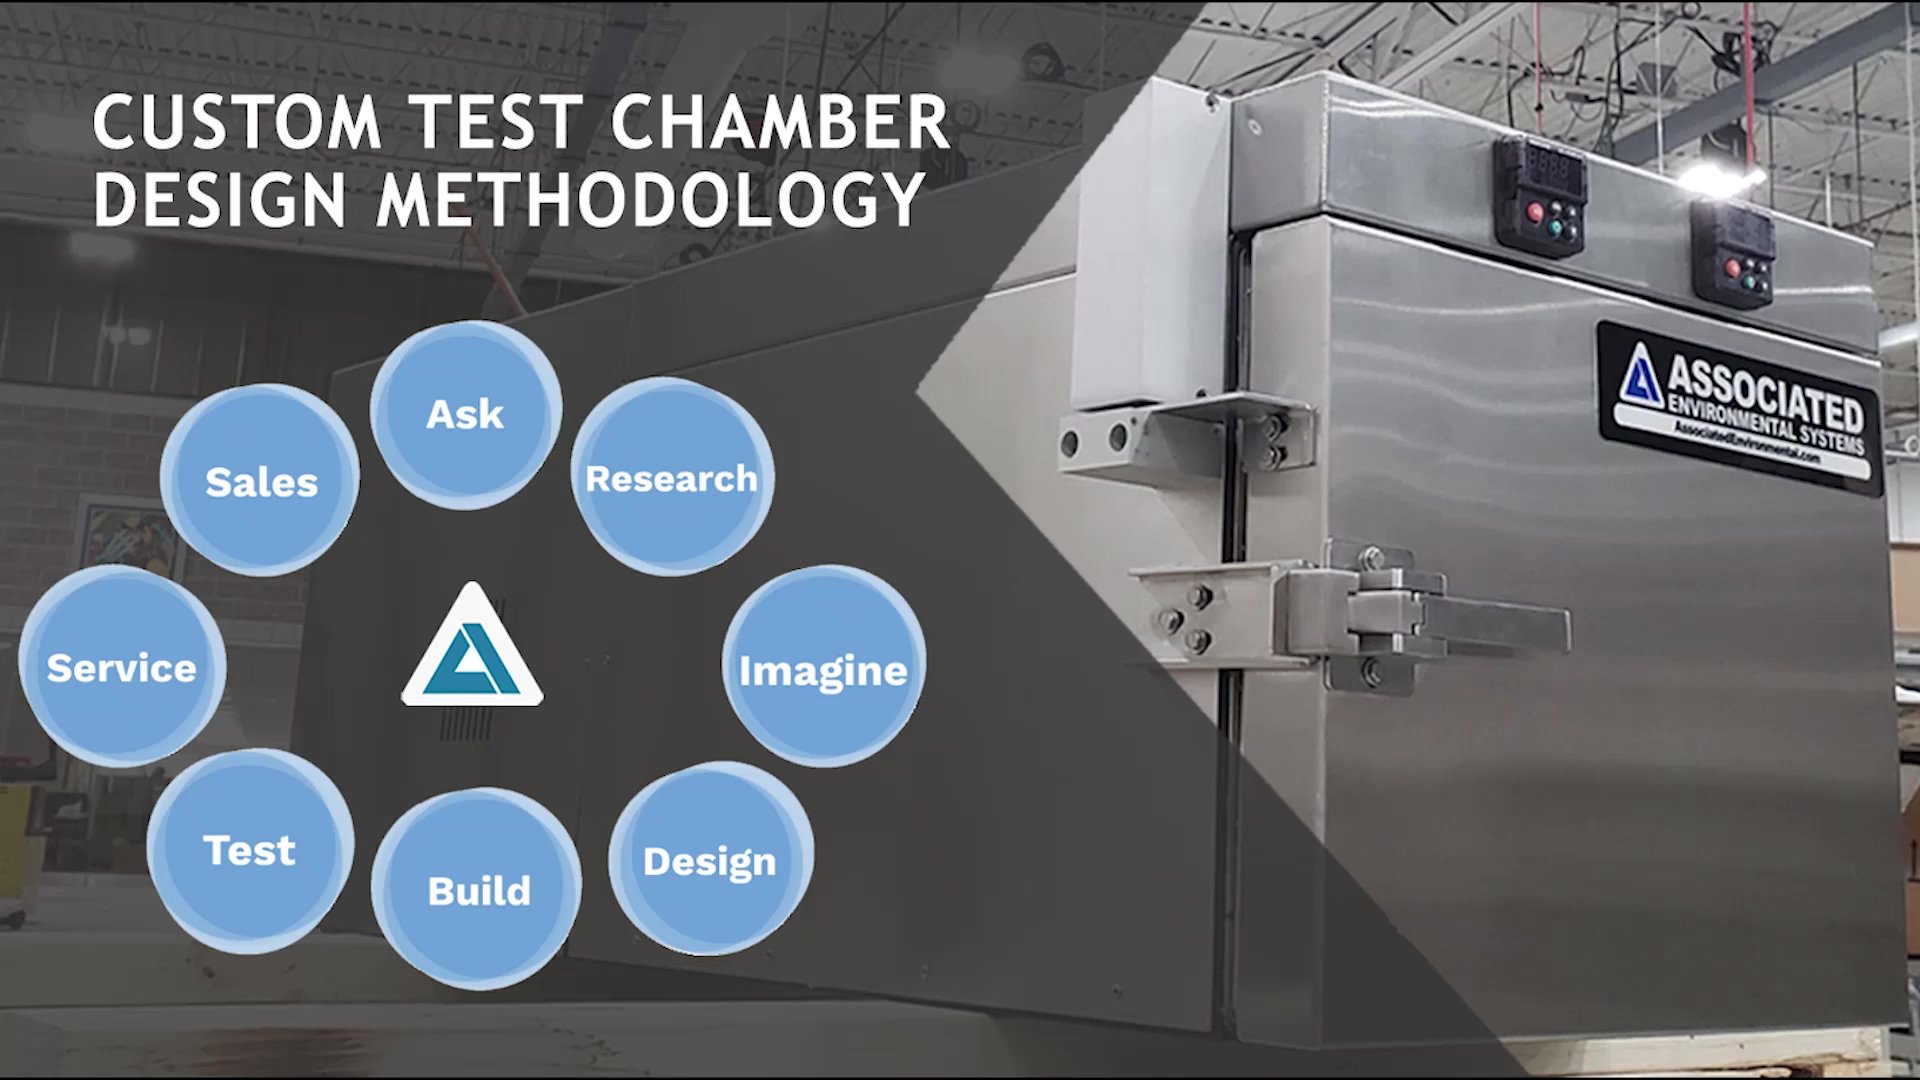 Using a design methodology makes getting your custom environmental test chamber easy.